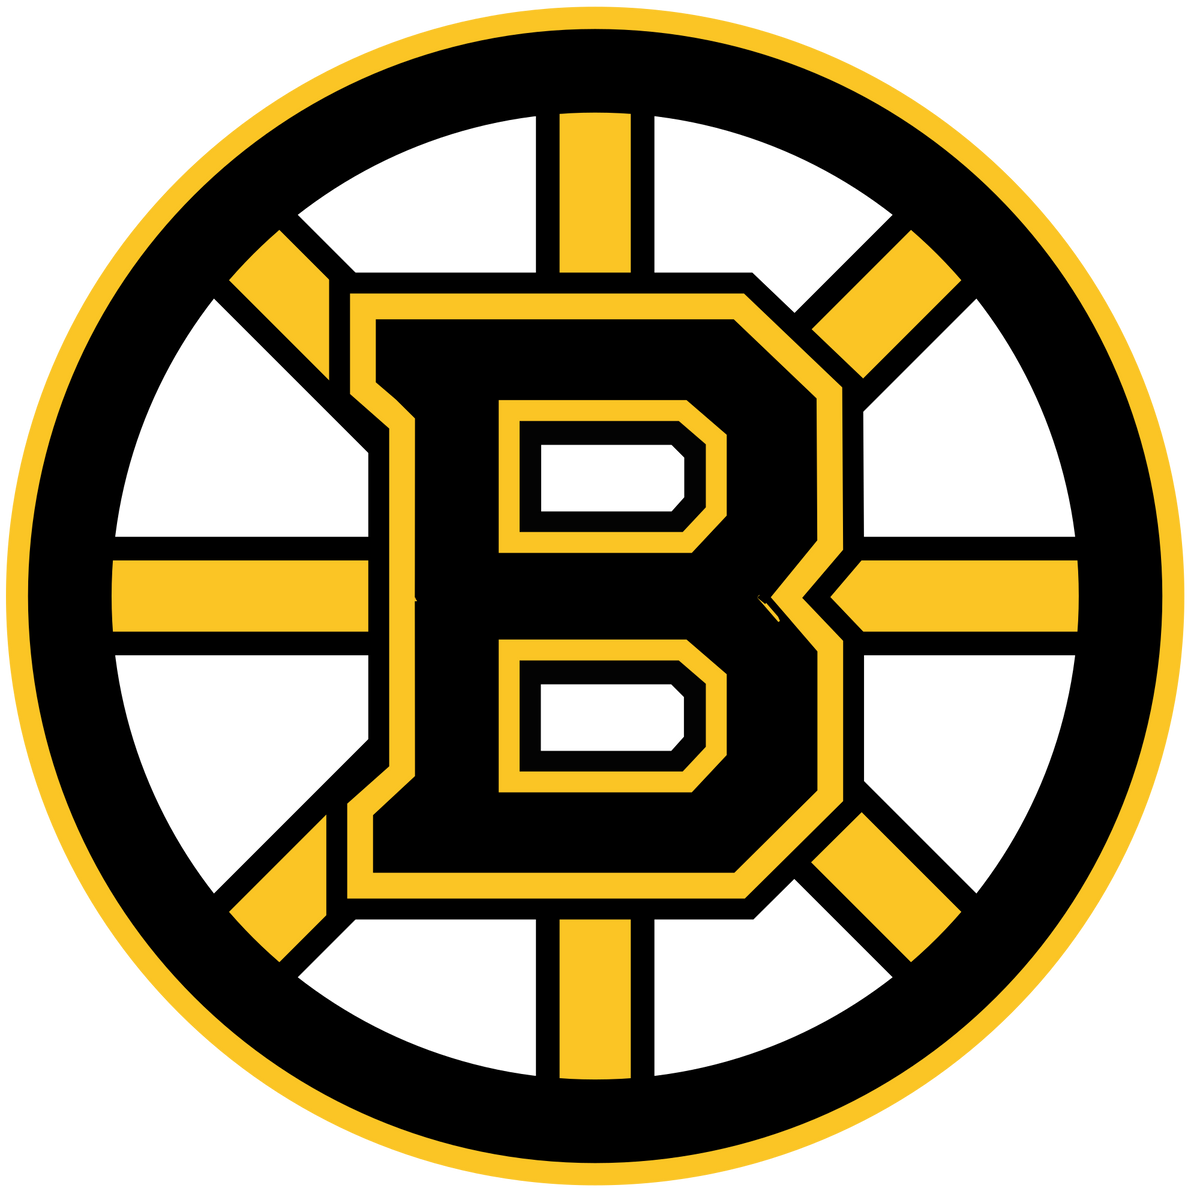 47 Brand Boston Bruins MVP Bone NHL Team Cap